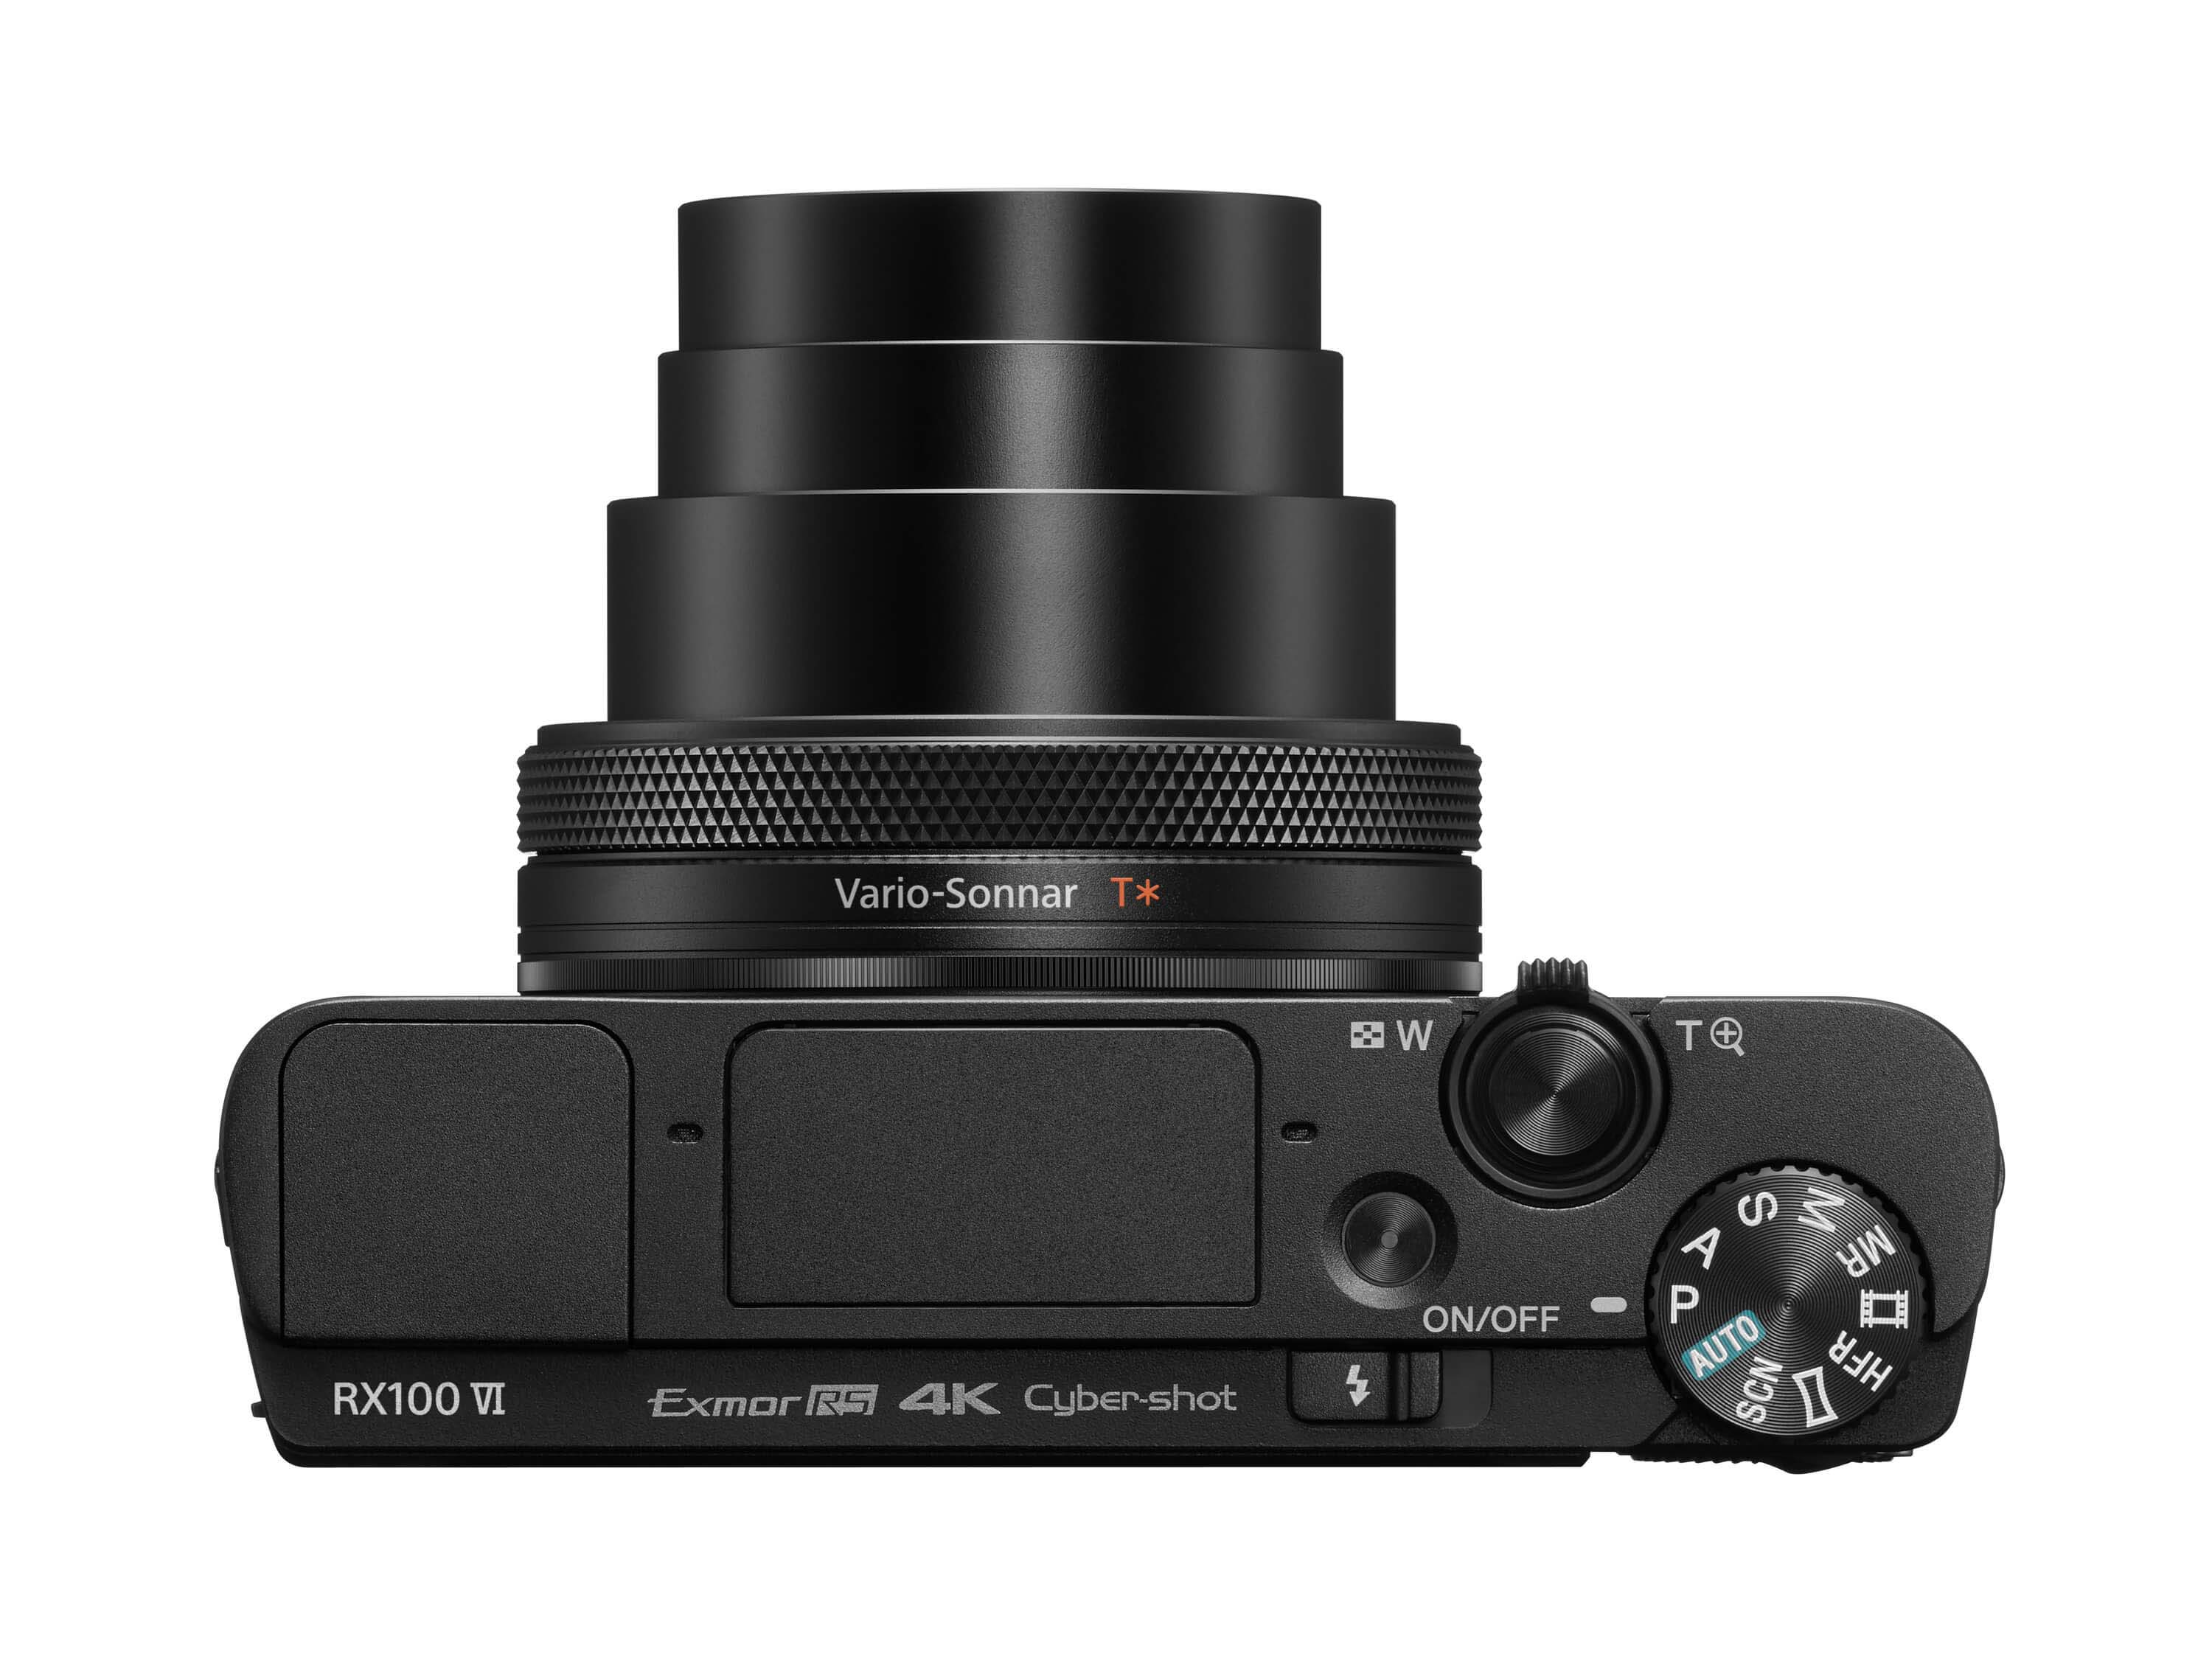 RX100 VI - Cyber-shot 數位相機- Sony 台灣官方購物網站- Sony Store 